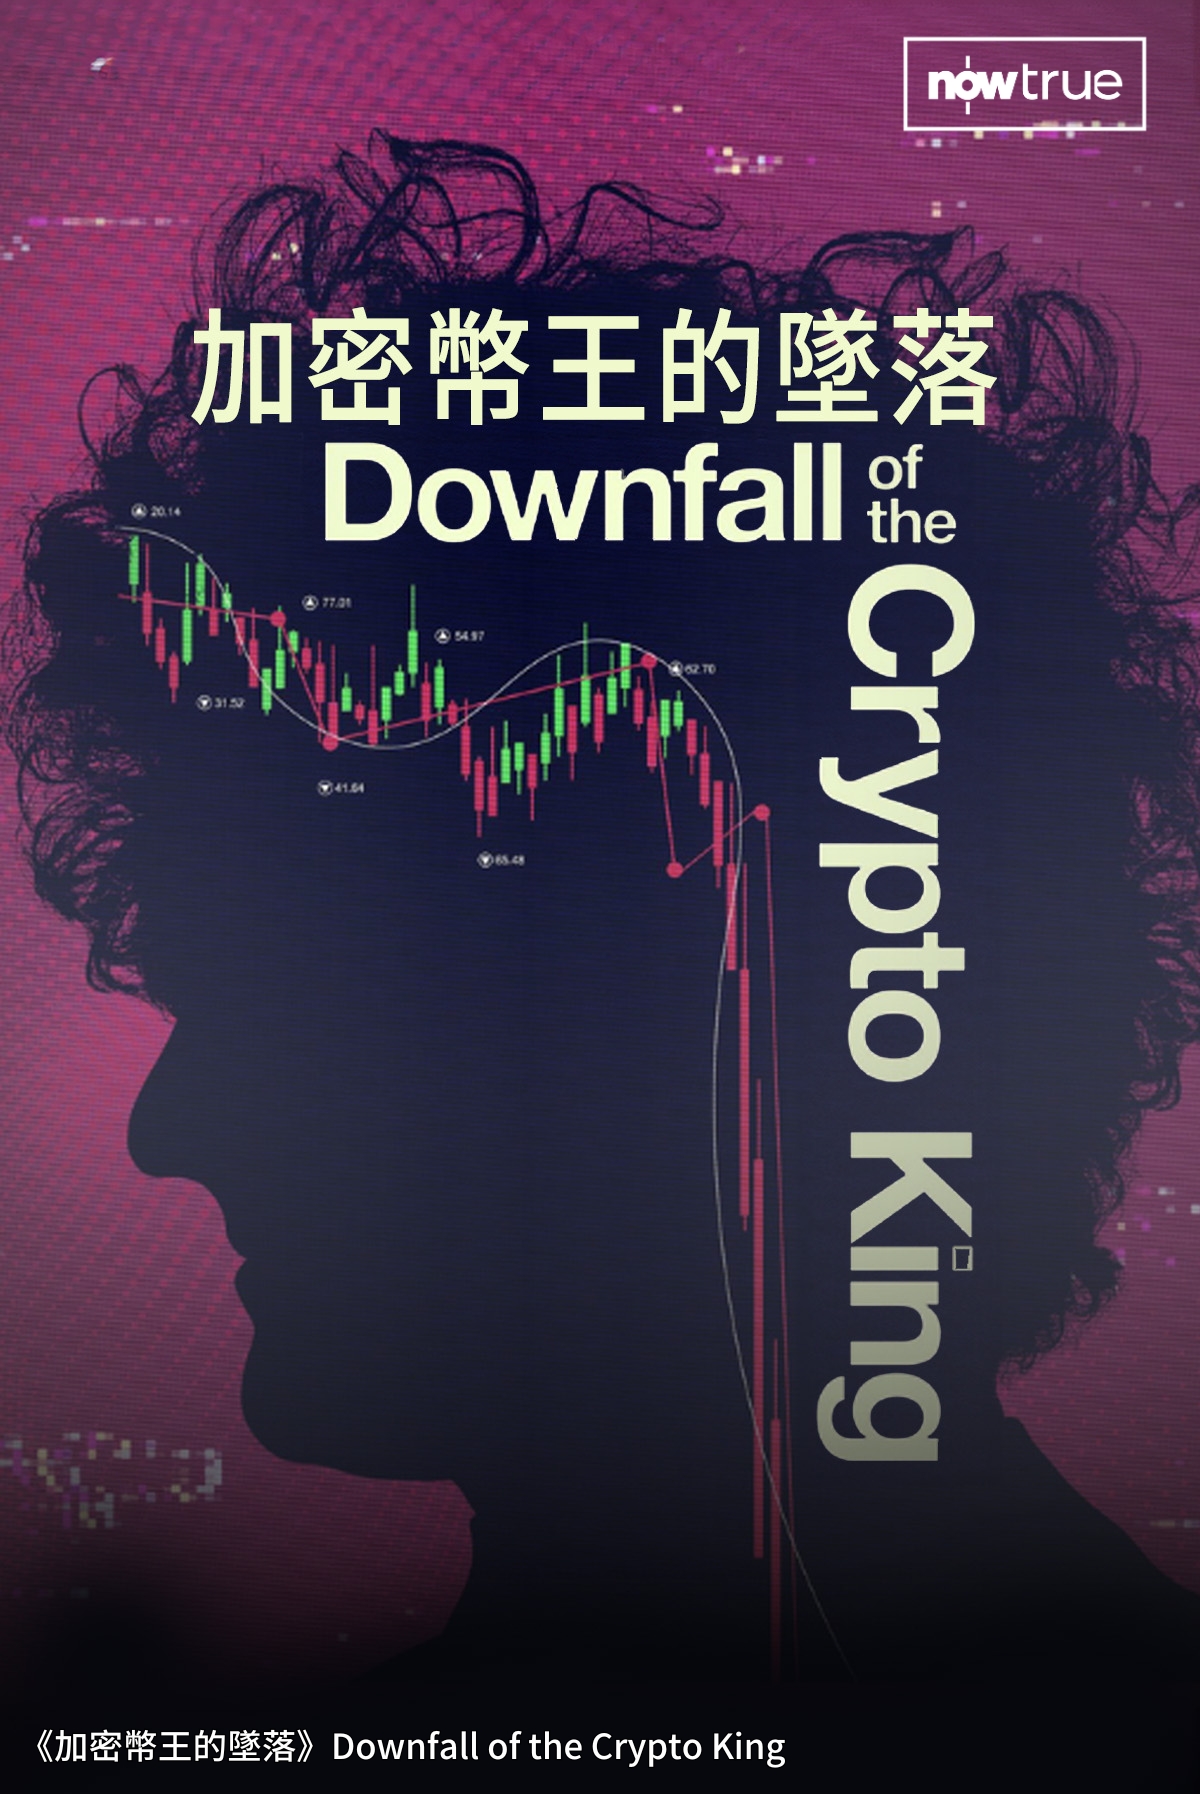 Now True 人物記錄片《加密幣王的墜落》(Downfall of the Crypto King) 海報